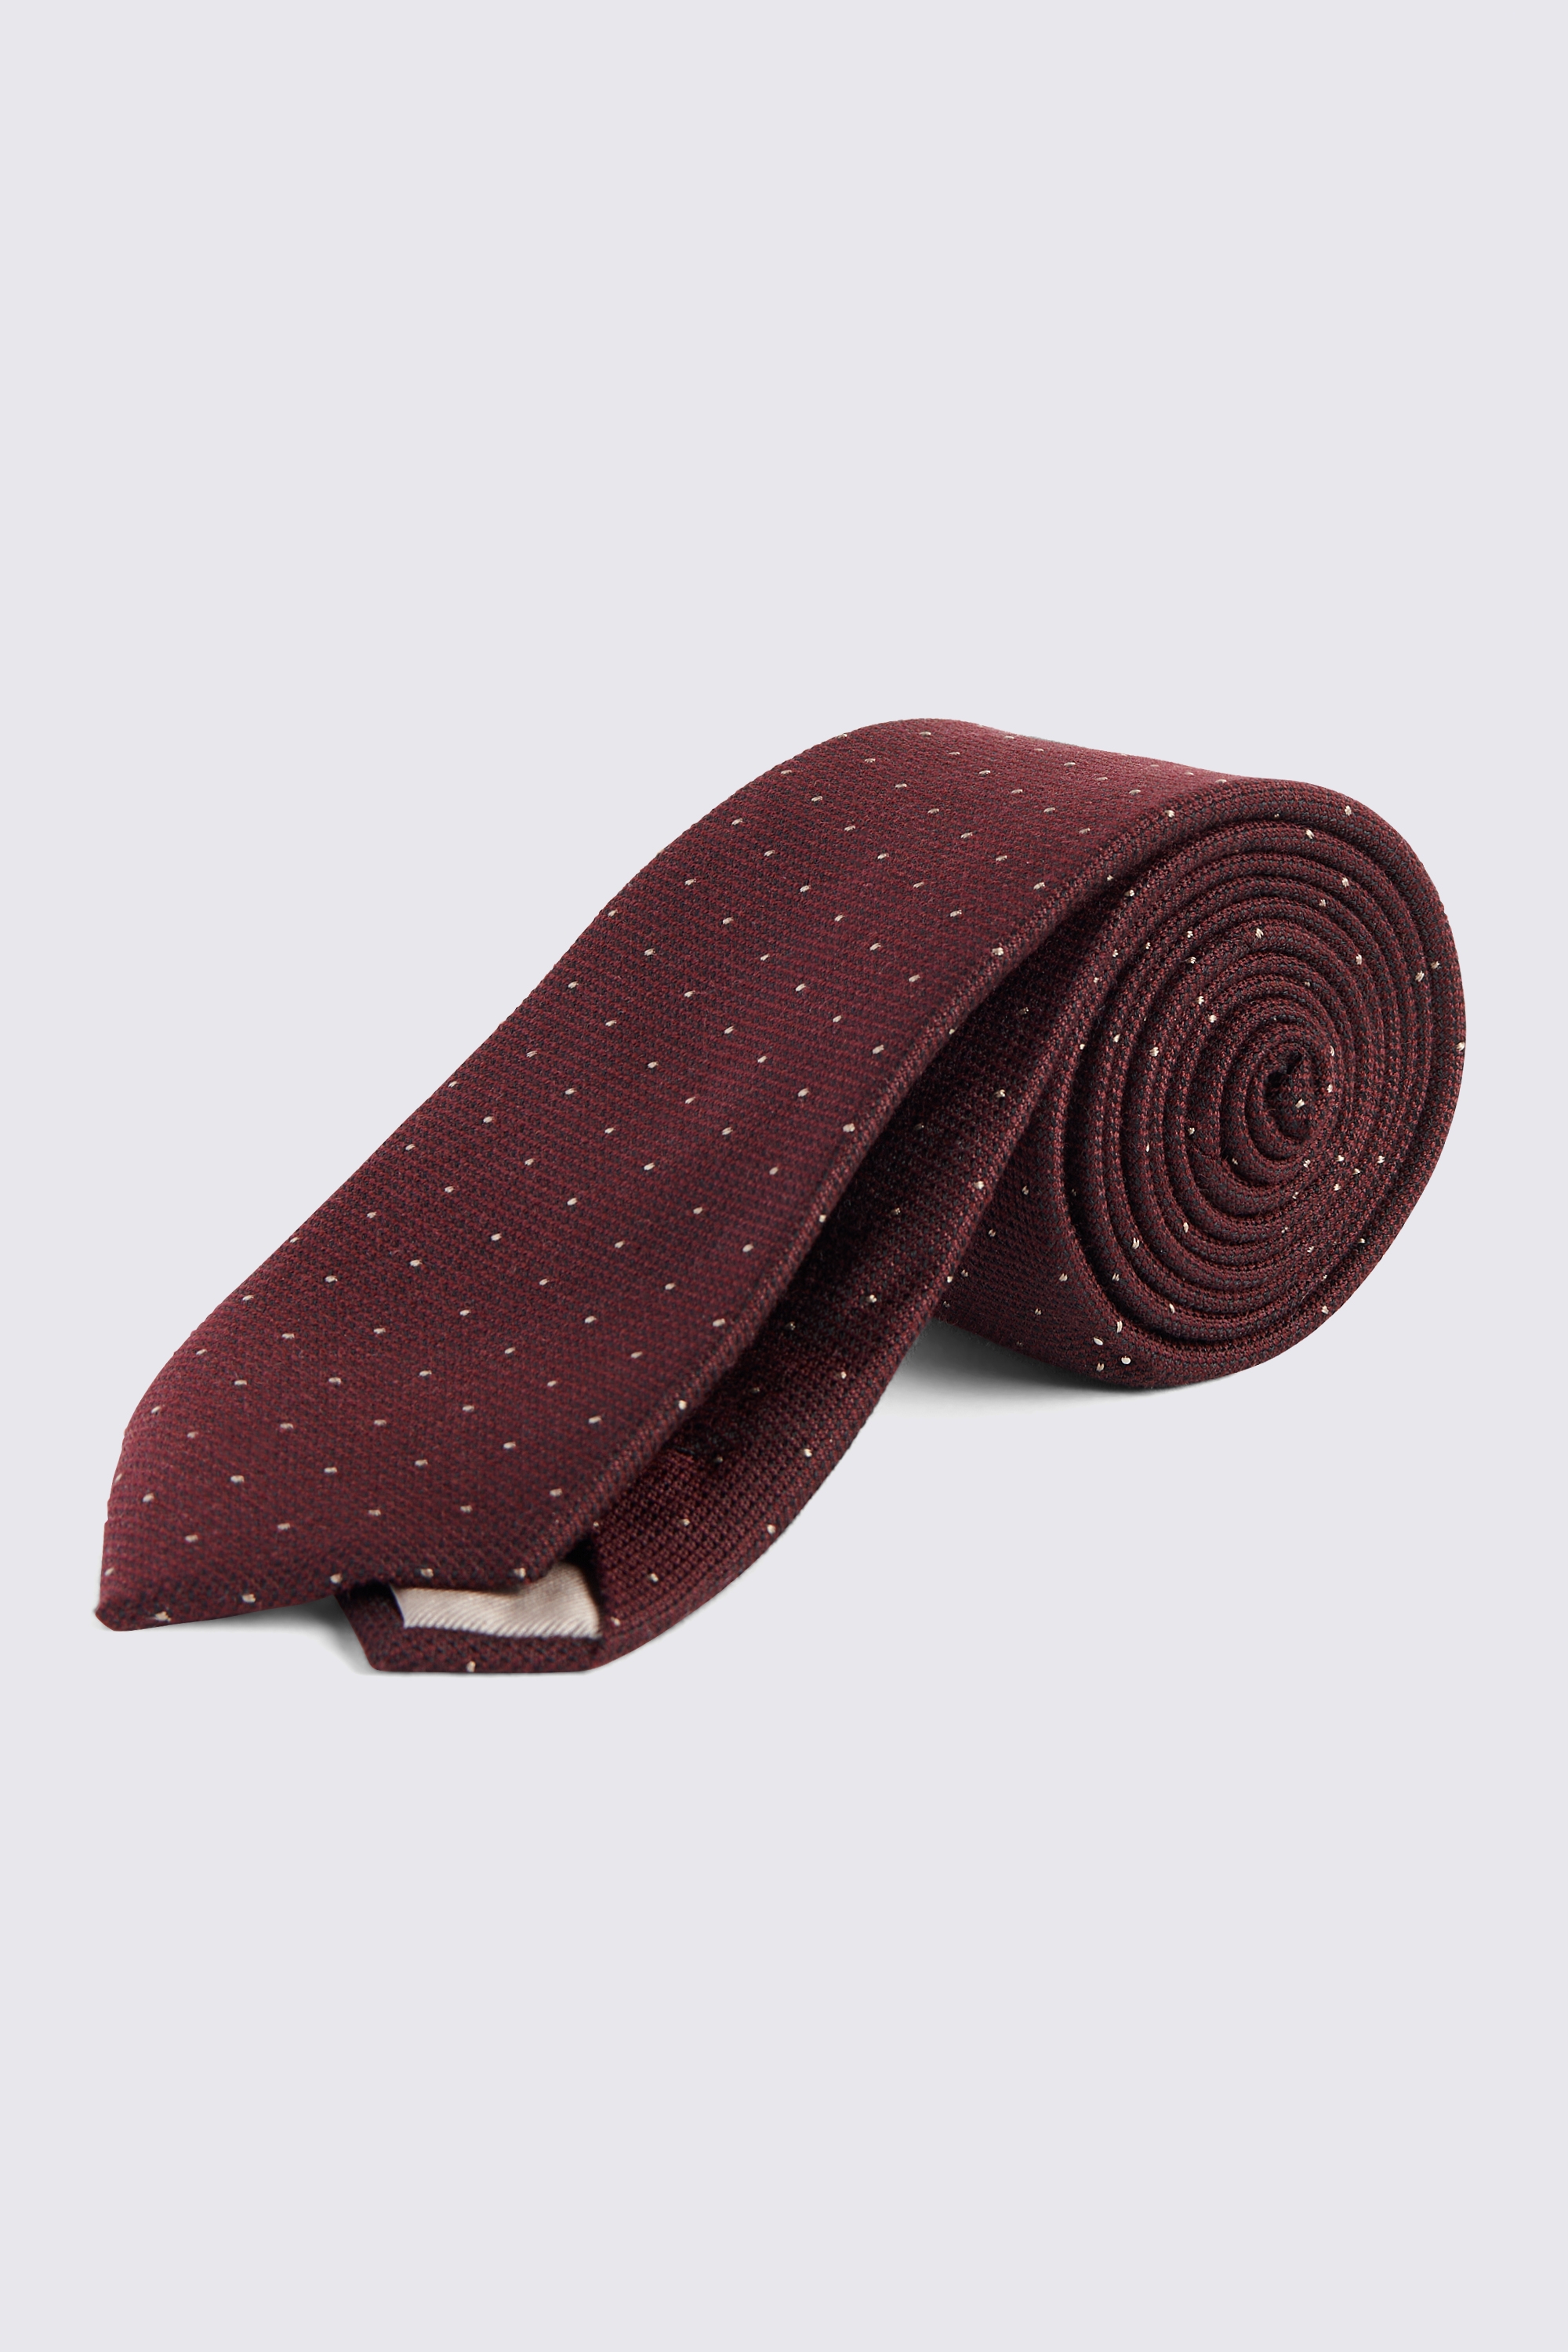 Oxblood Pindot Silk & Wool Tie | Buy Online at Moss